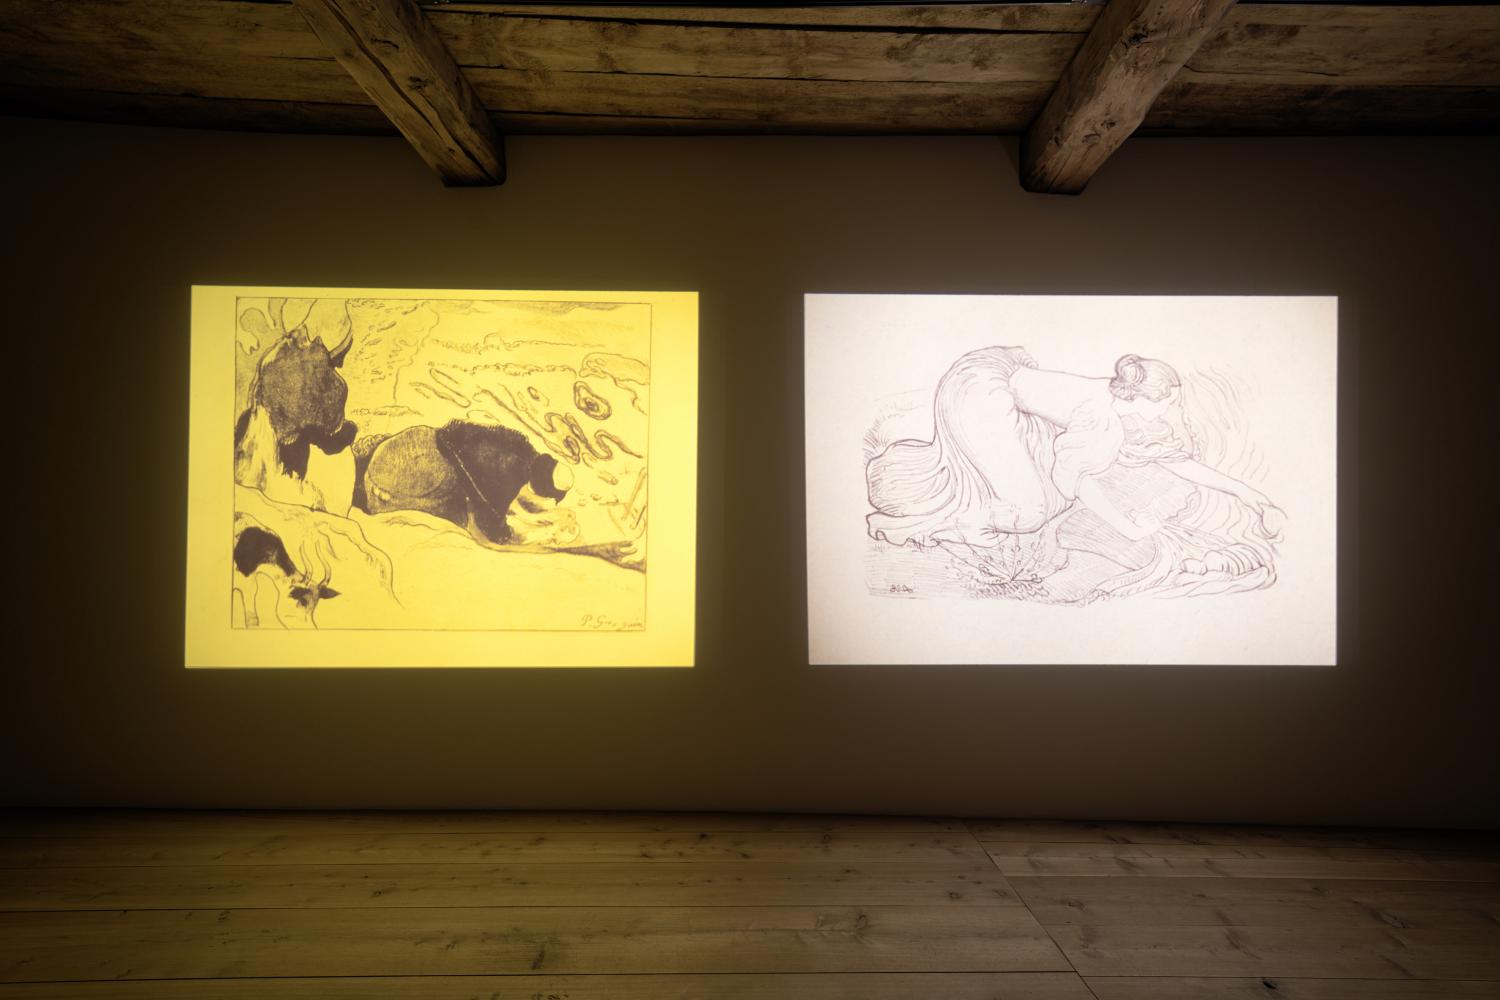 Andrea Büttner, "Kunstgeschichte des Bückens", 2021, Ausstellungsansicht "Triebe", Galerie Tschudi, Zuoz, 2021